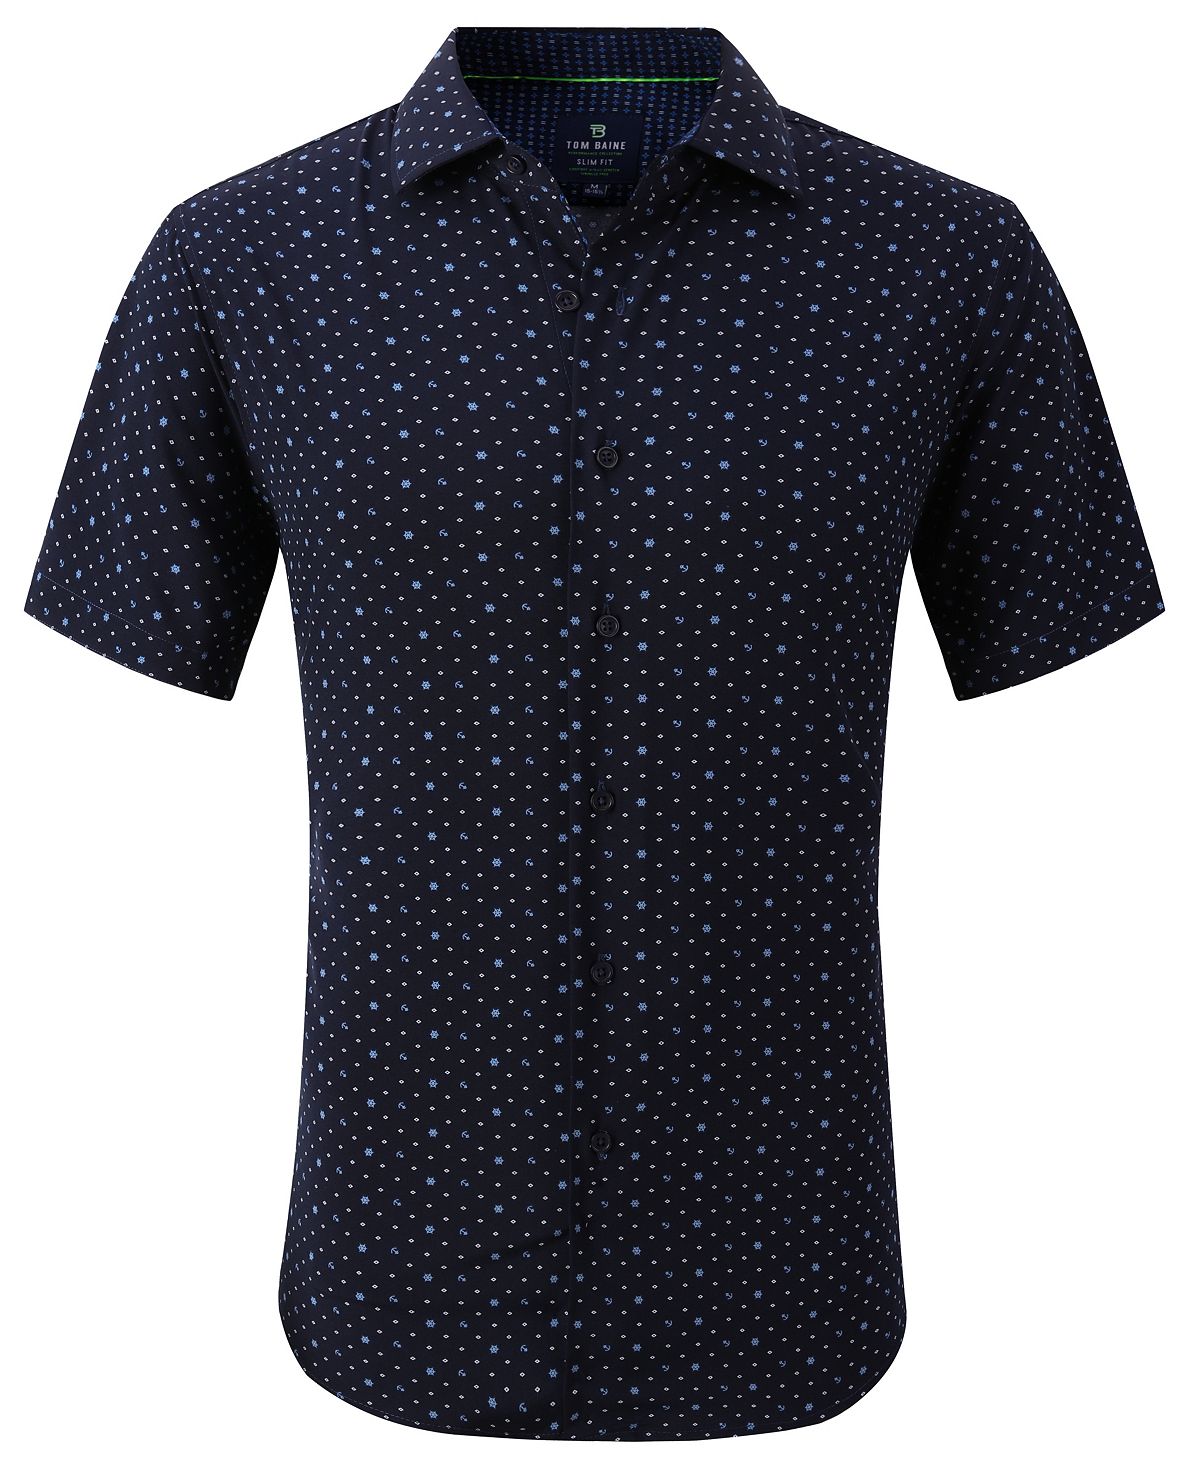 цена Мужская классическая рубашка slim fit с коротким рукавом на пуговицах Tom Baine, темно-синий